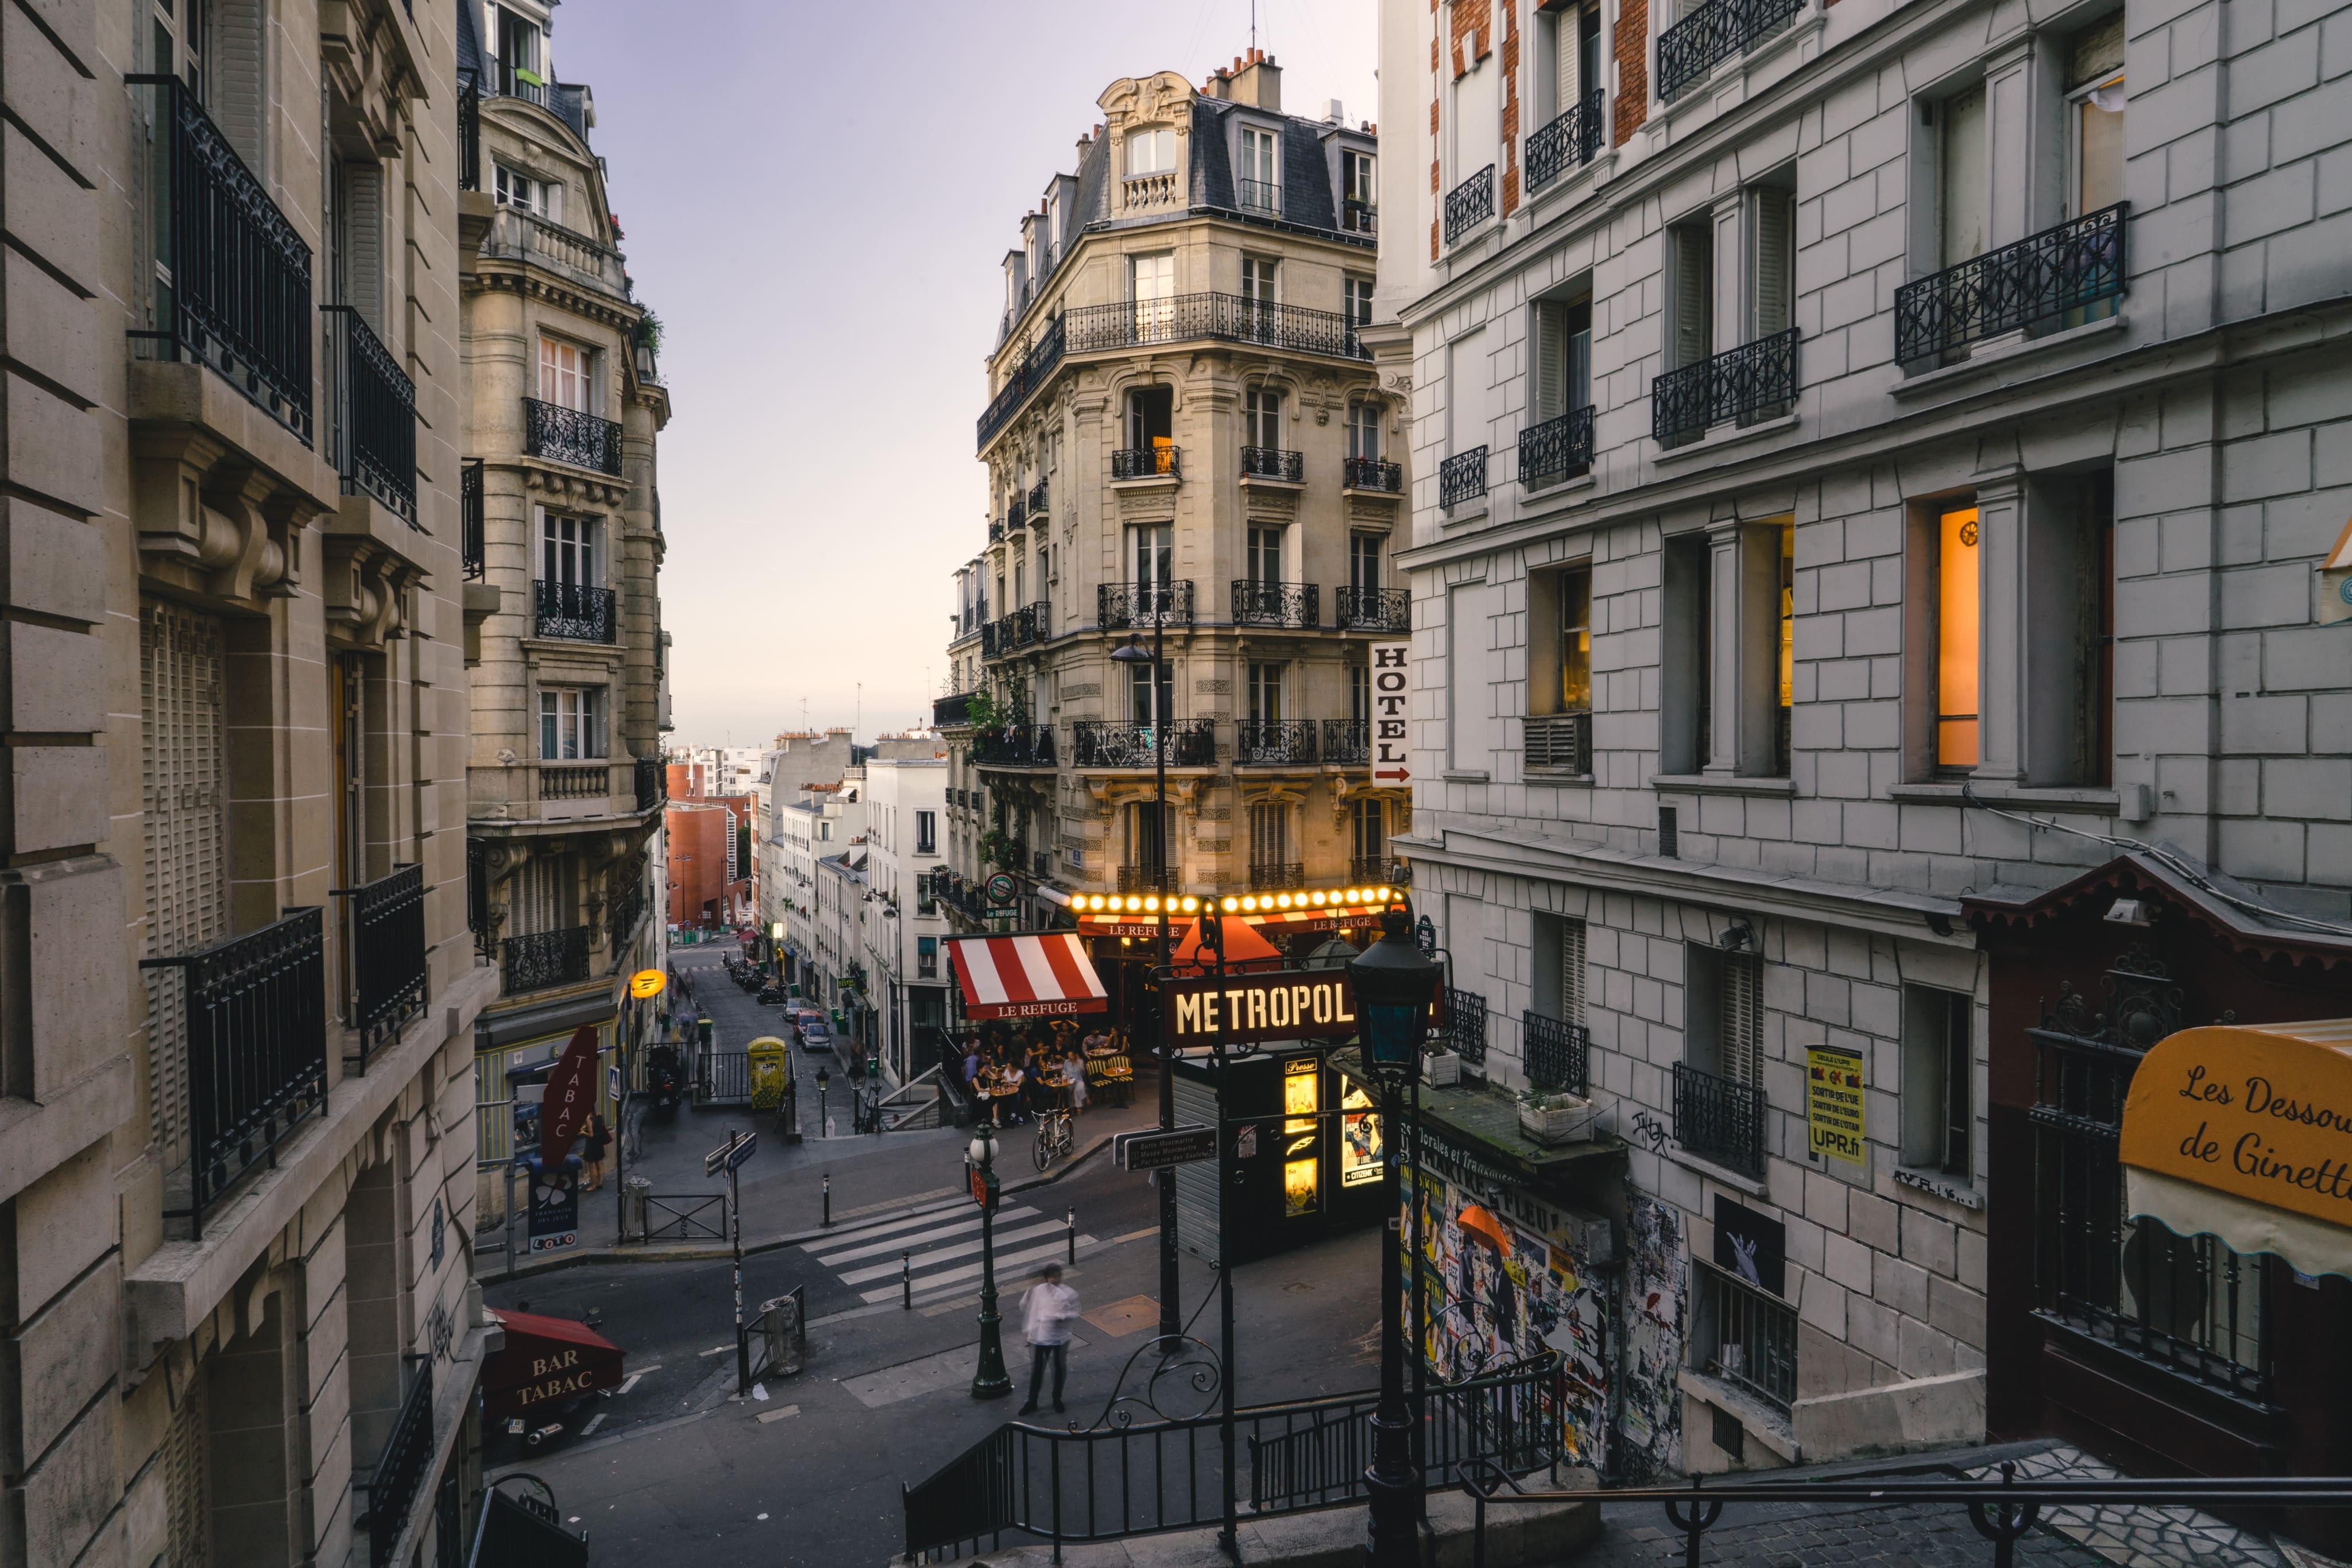 A Parisian streetscape